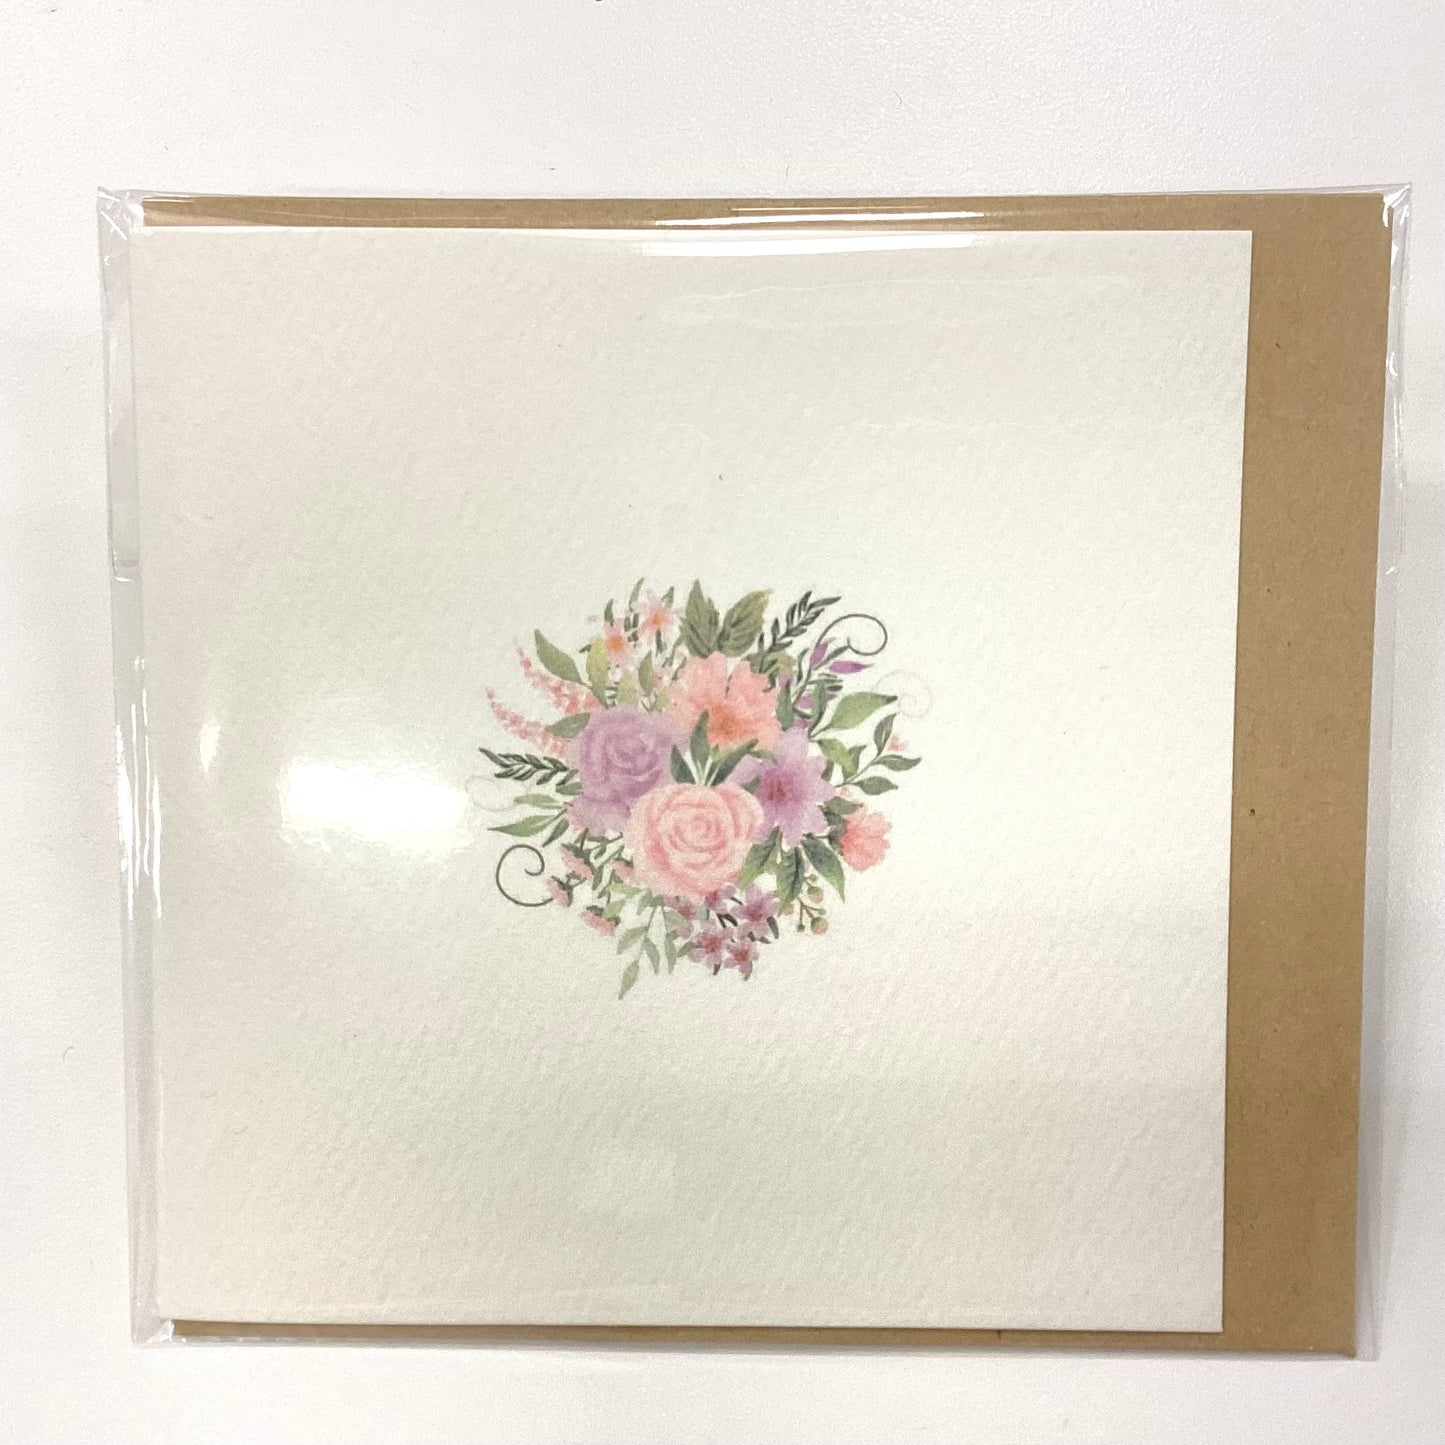 Flower Bouquet Mini Card